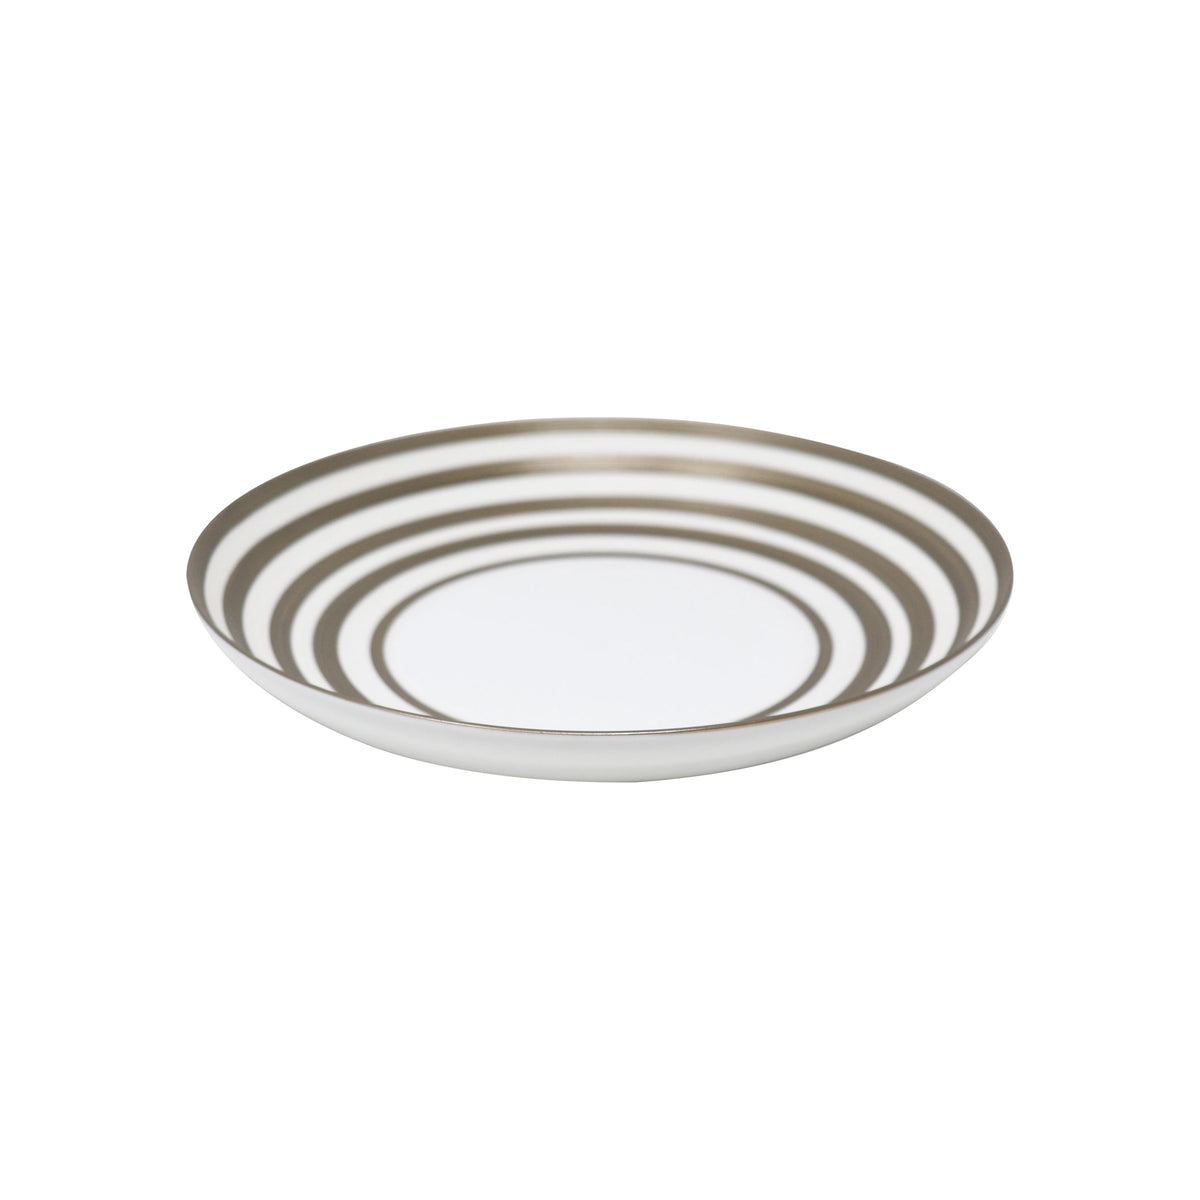 HEMISPHERE Striped Grey Metallic - Pasta plate MM